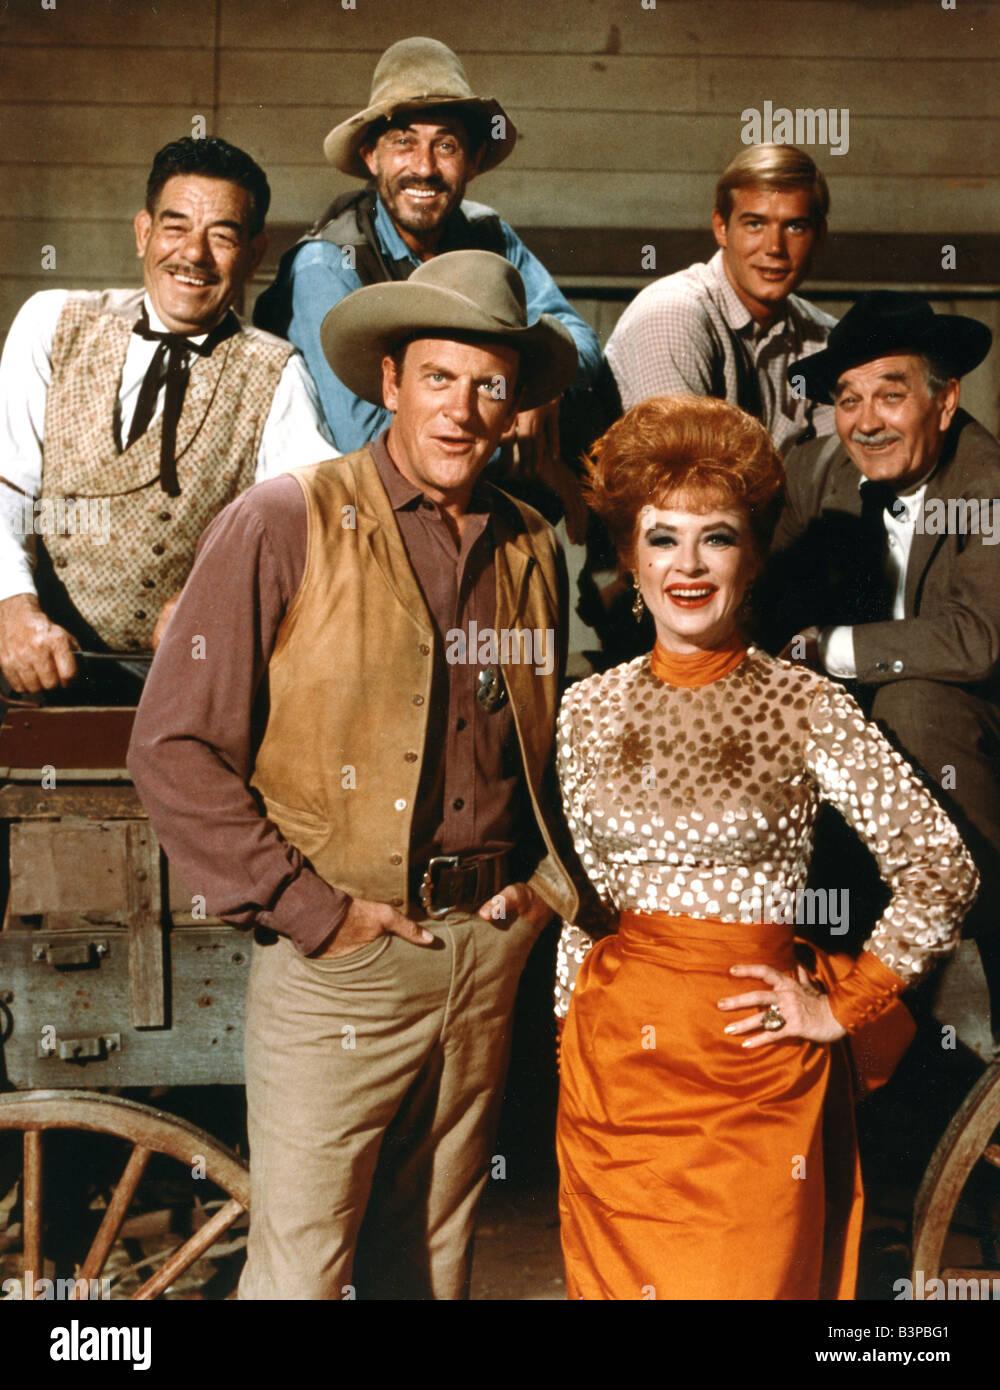 GUNSMOKE   US TV series 1955 to 1975 with James Arness and Amanda Blake in front of wagon Stock Photo